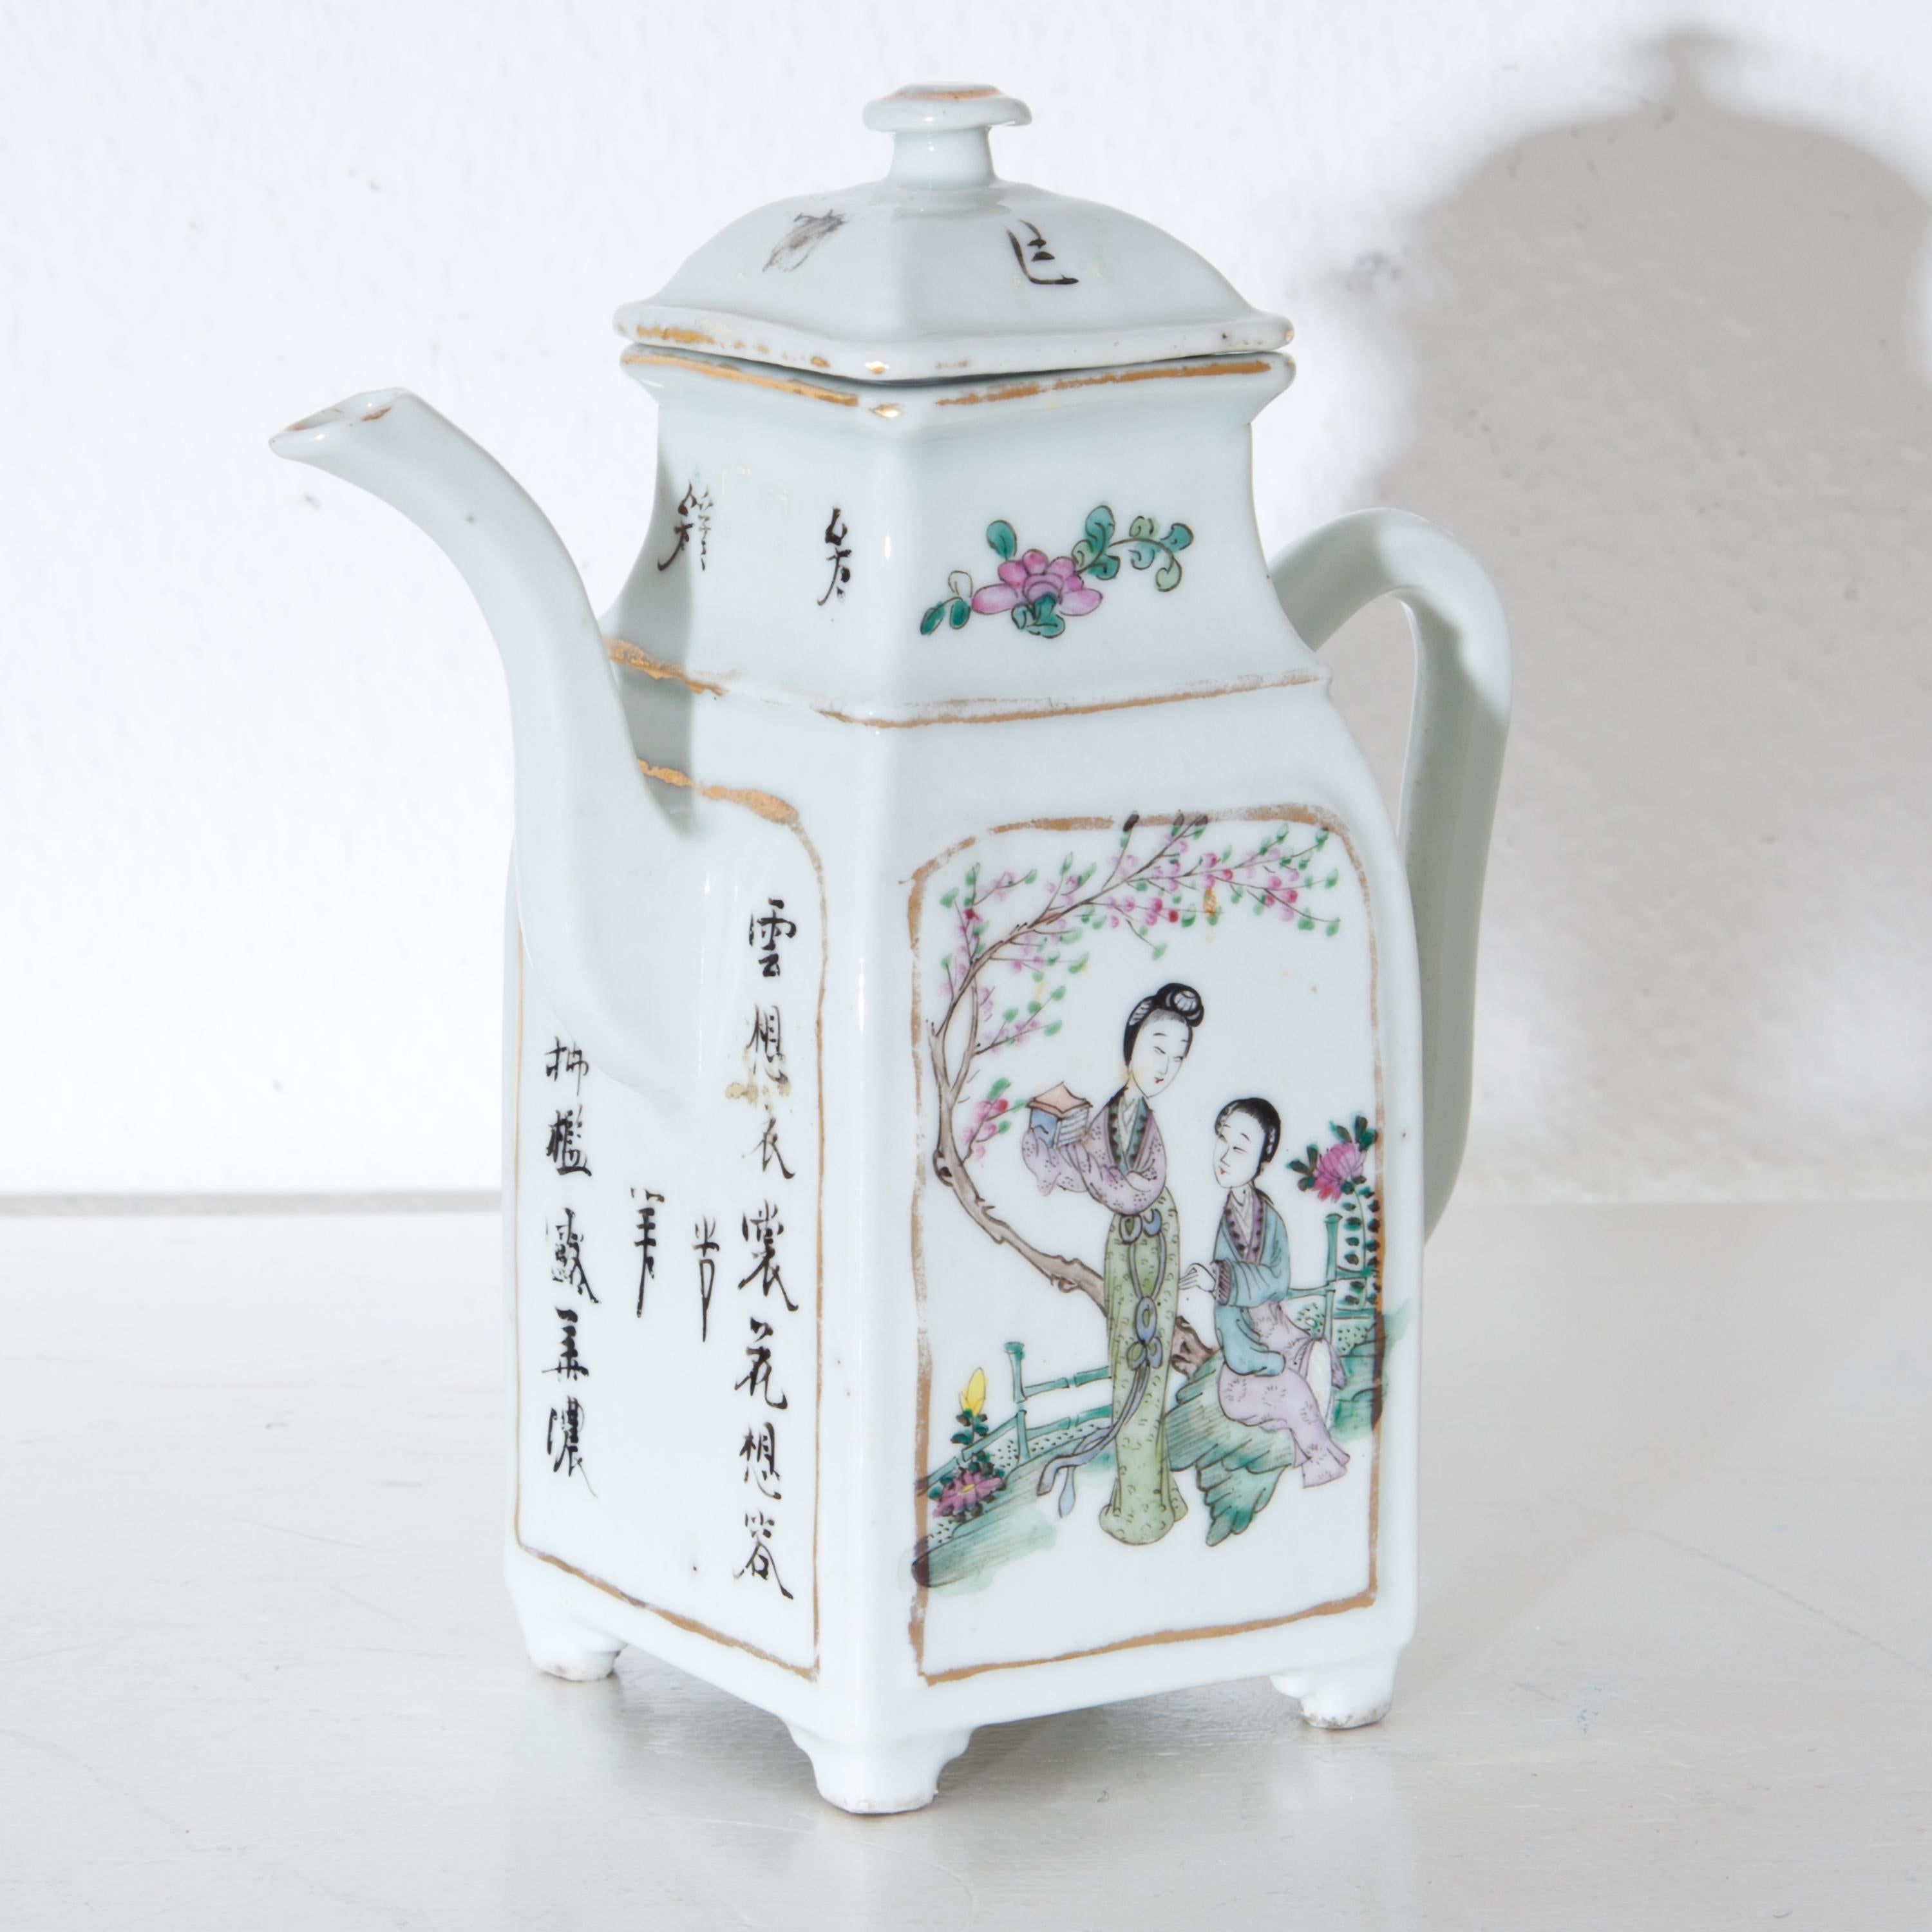 Chinese Tongzhi Porcelain Teapot, China, 19th Century